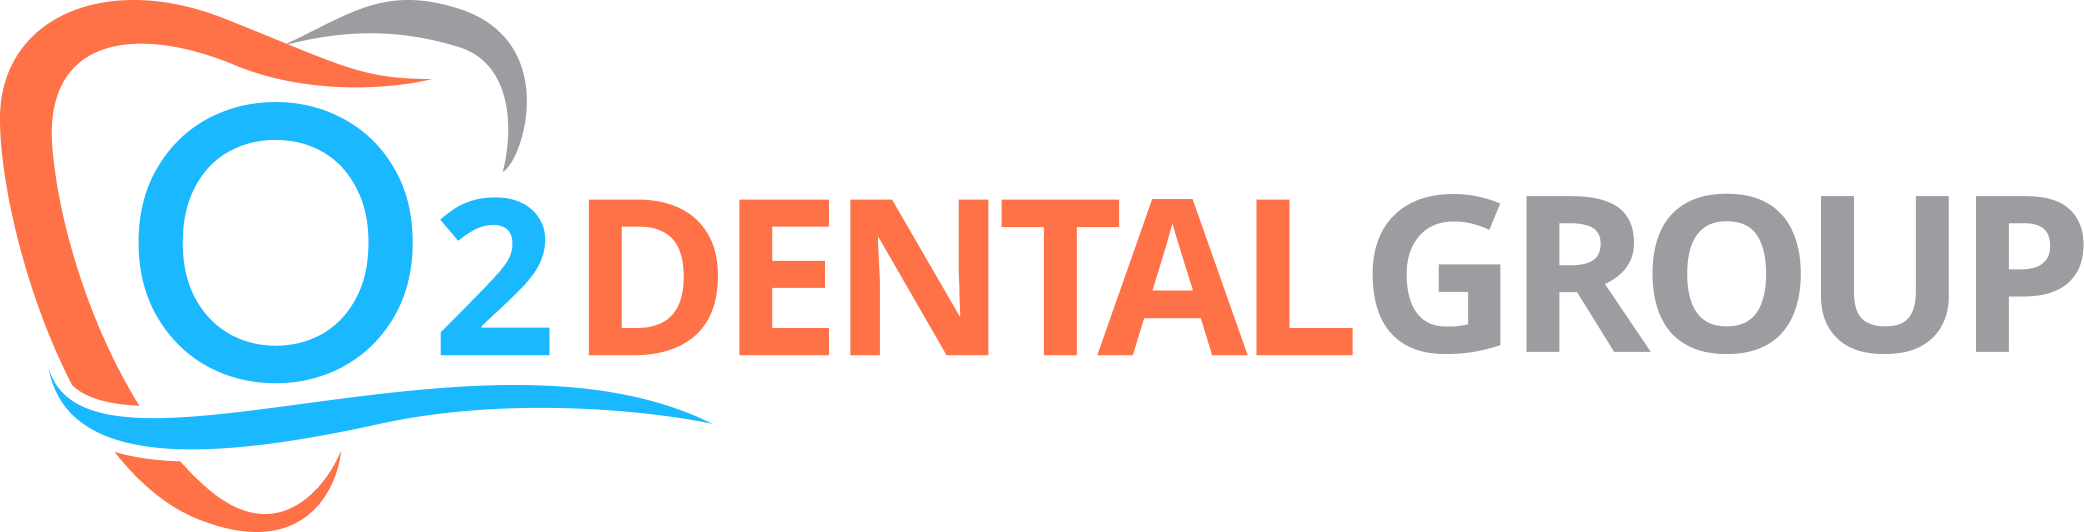 O2 Dental Group of Durham - logotipo